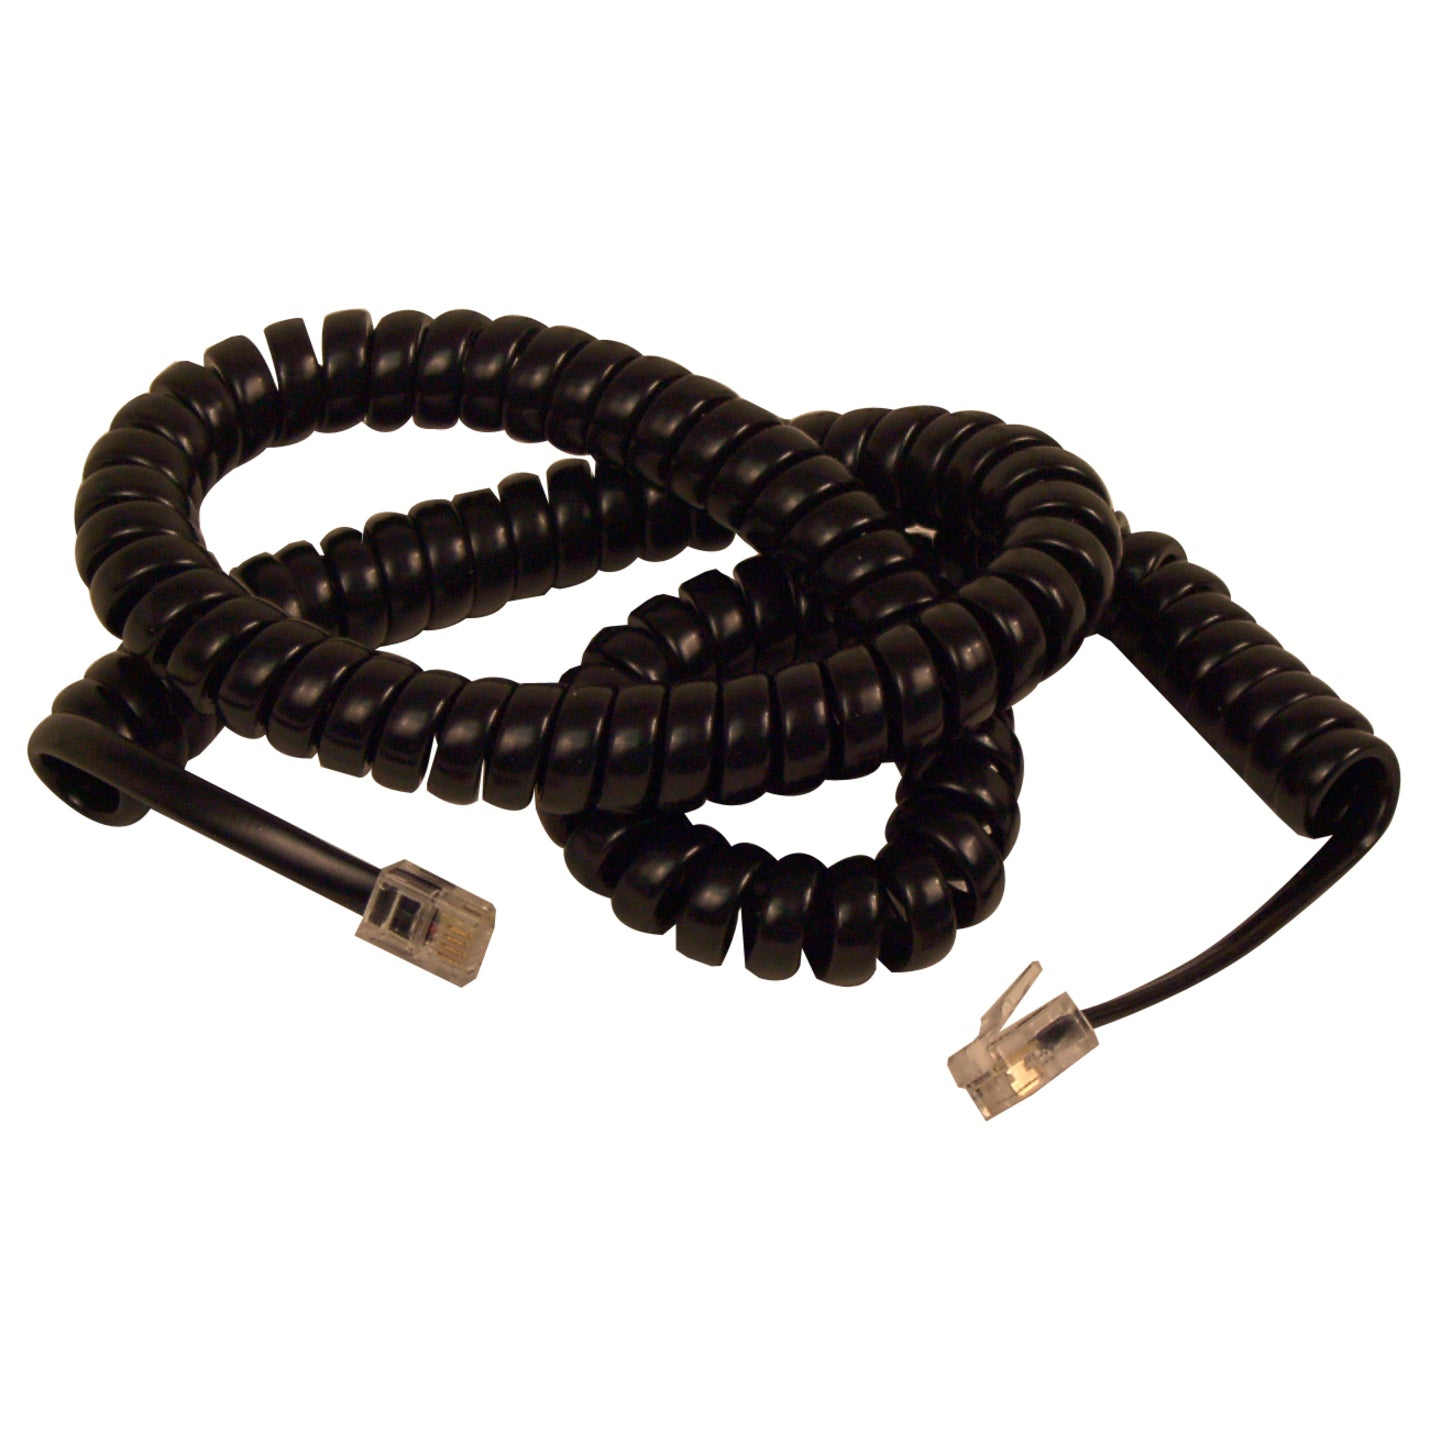 Belkin F8V101-25-BK Coiled Telephone Handset Cable, 25 ft, Low-Gauge Conductors